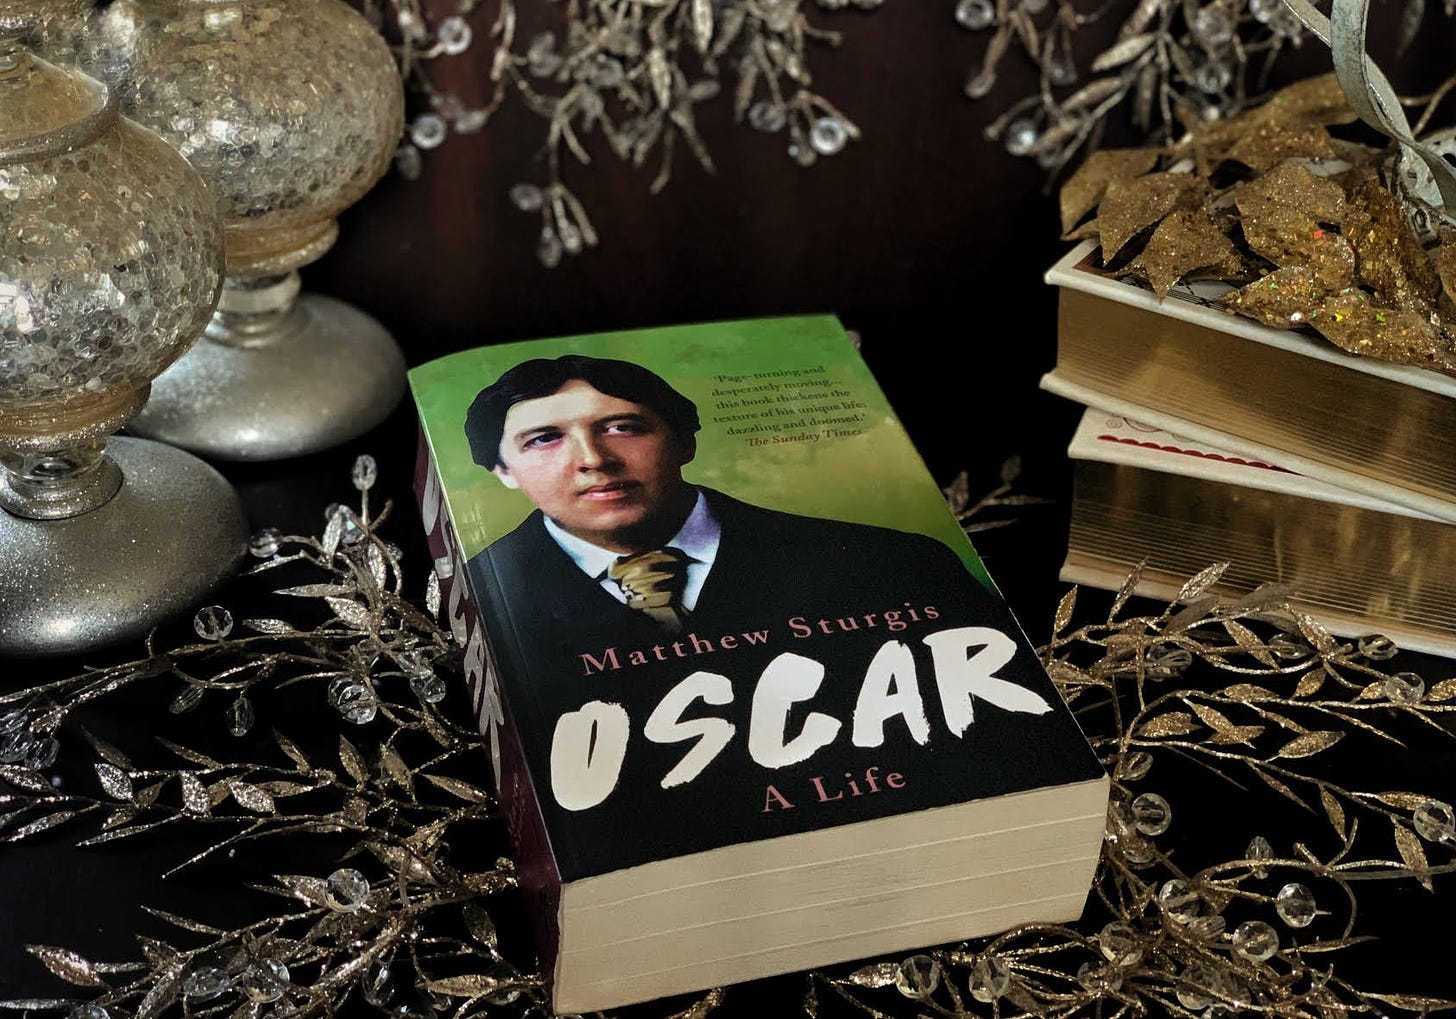 Oscar: A Life - Gallery and Studio